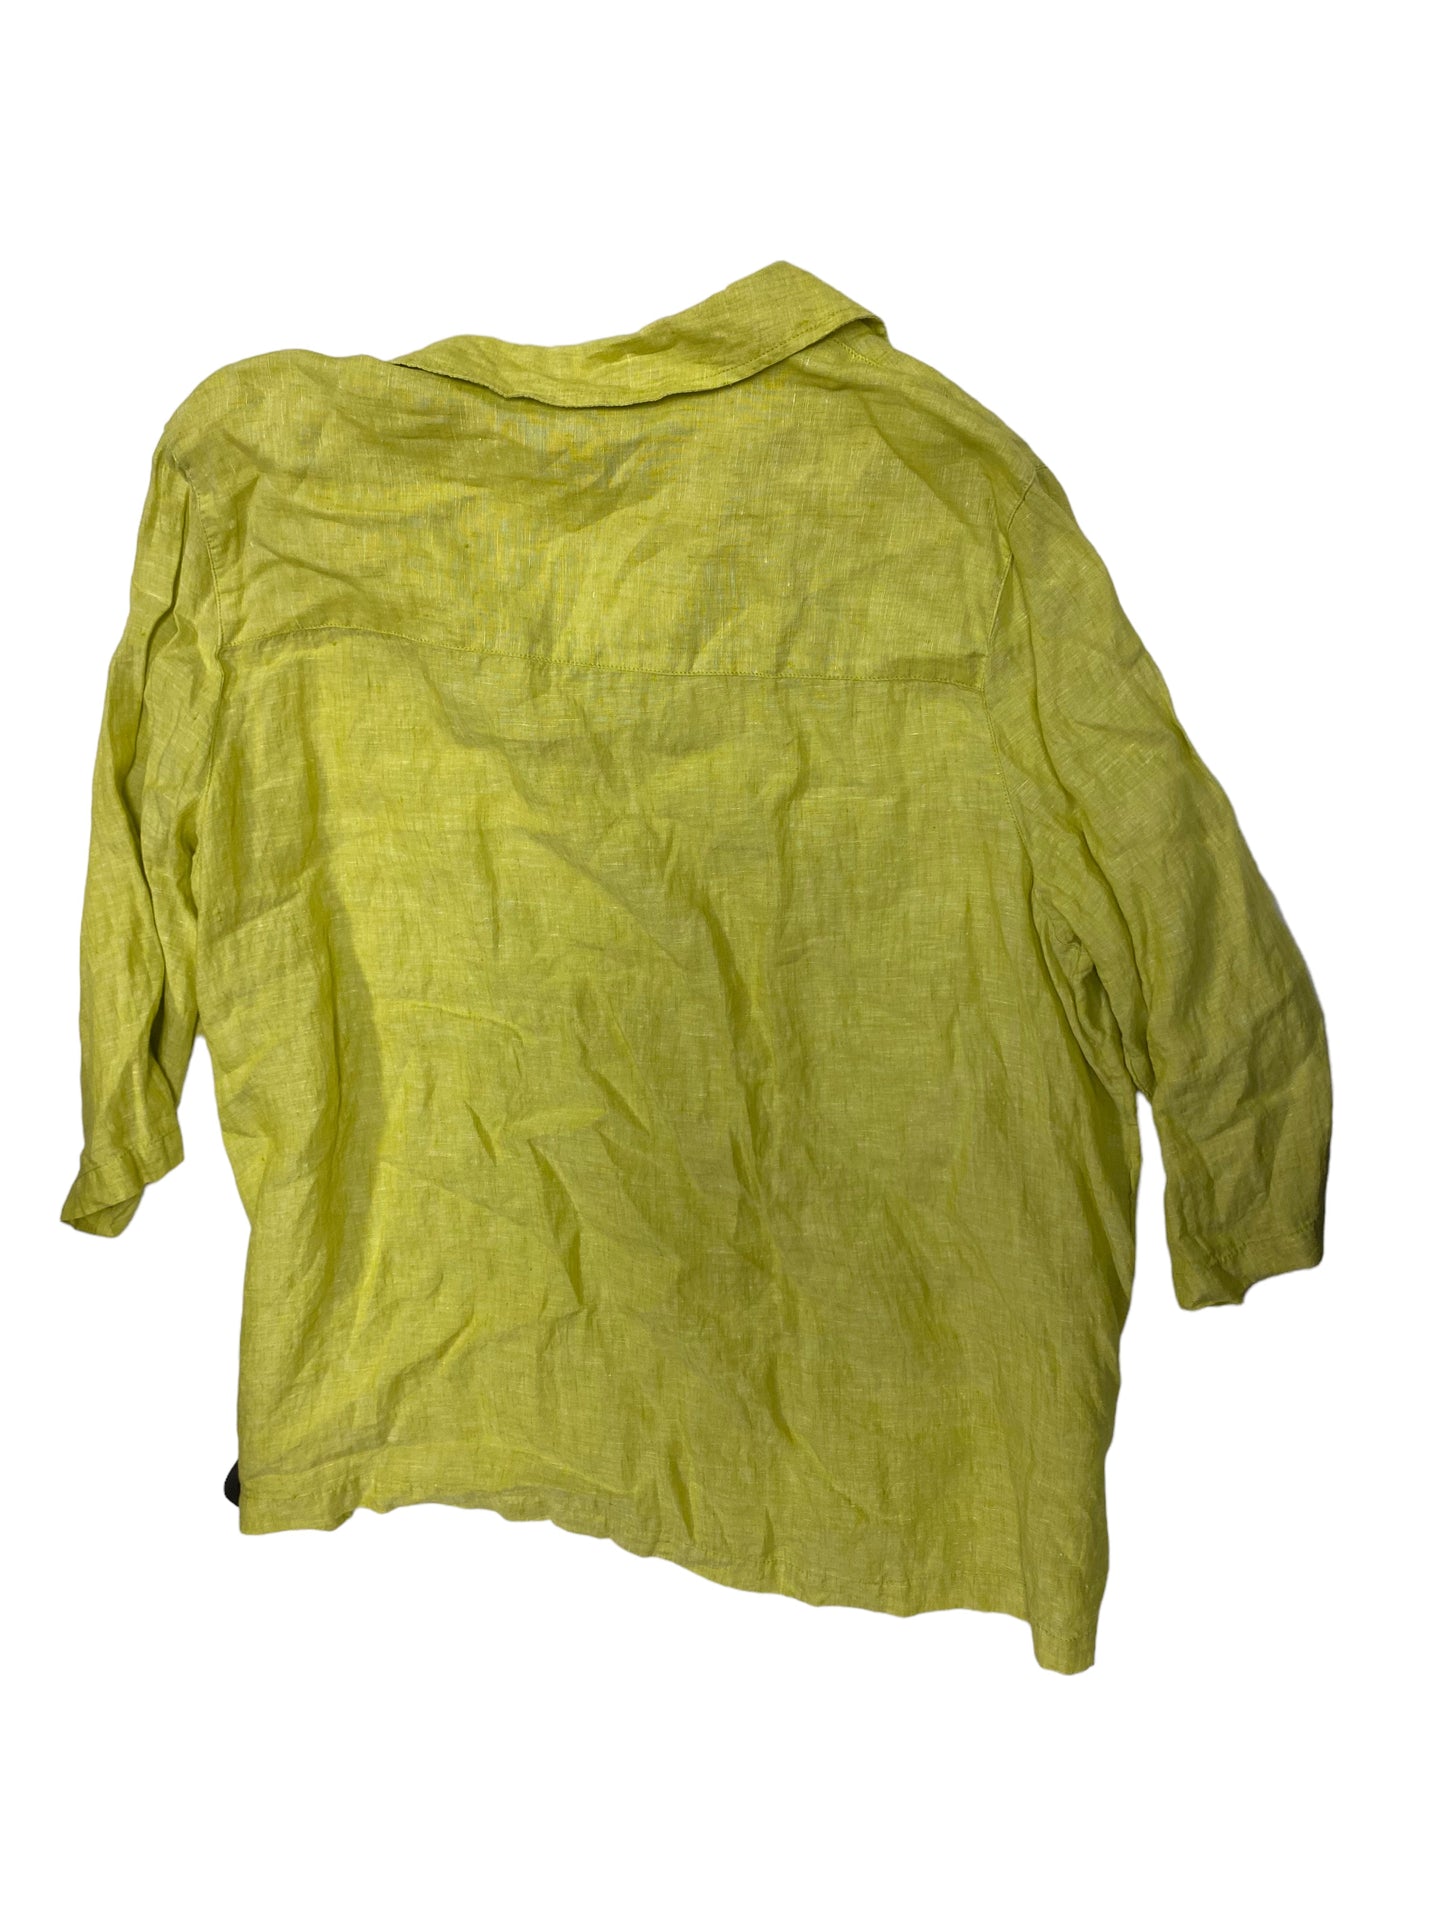 Chartreuse Top Long Sleeve Elie Tahari, Size 2x